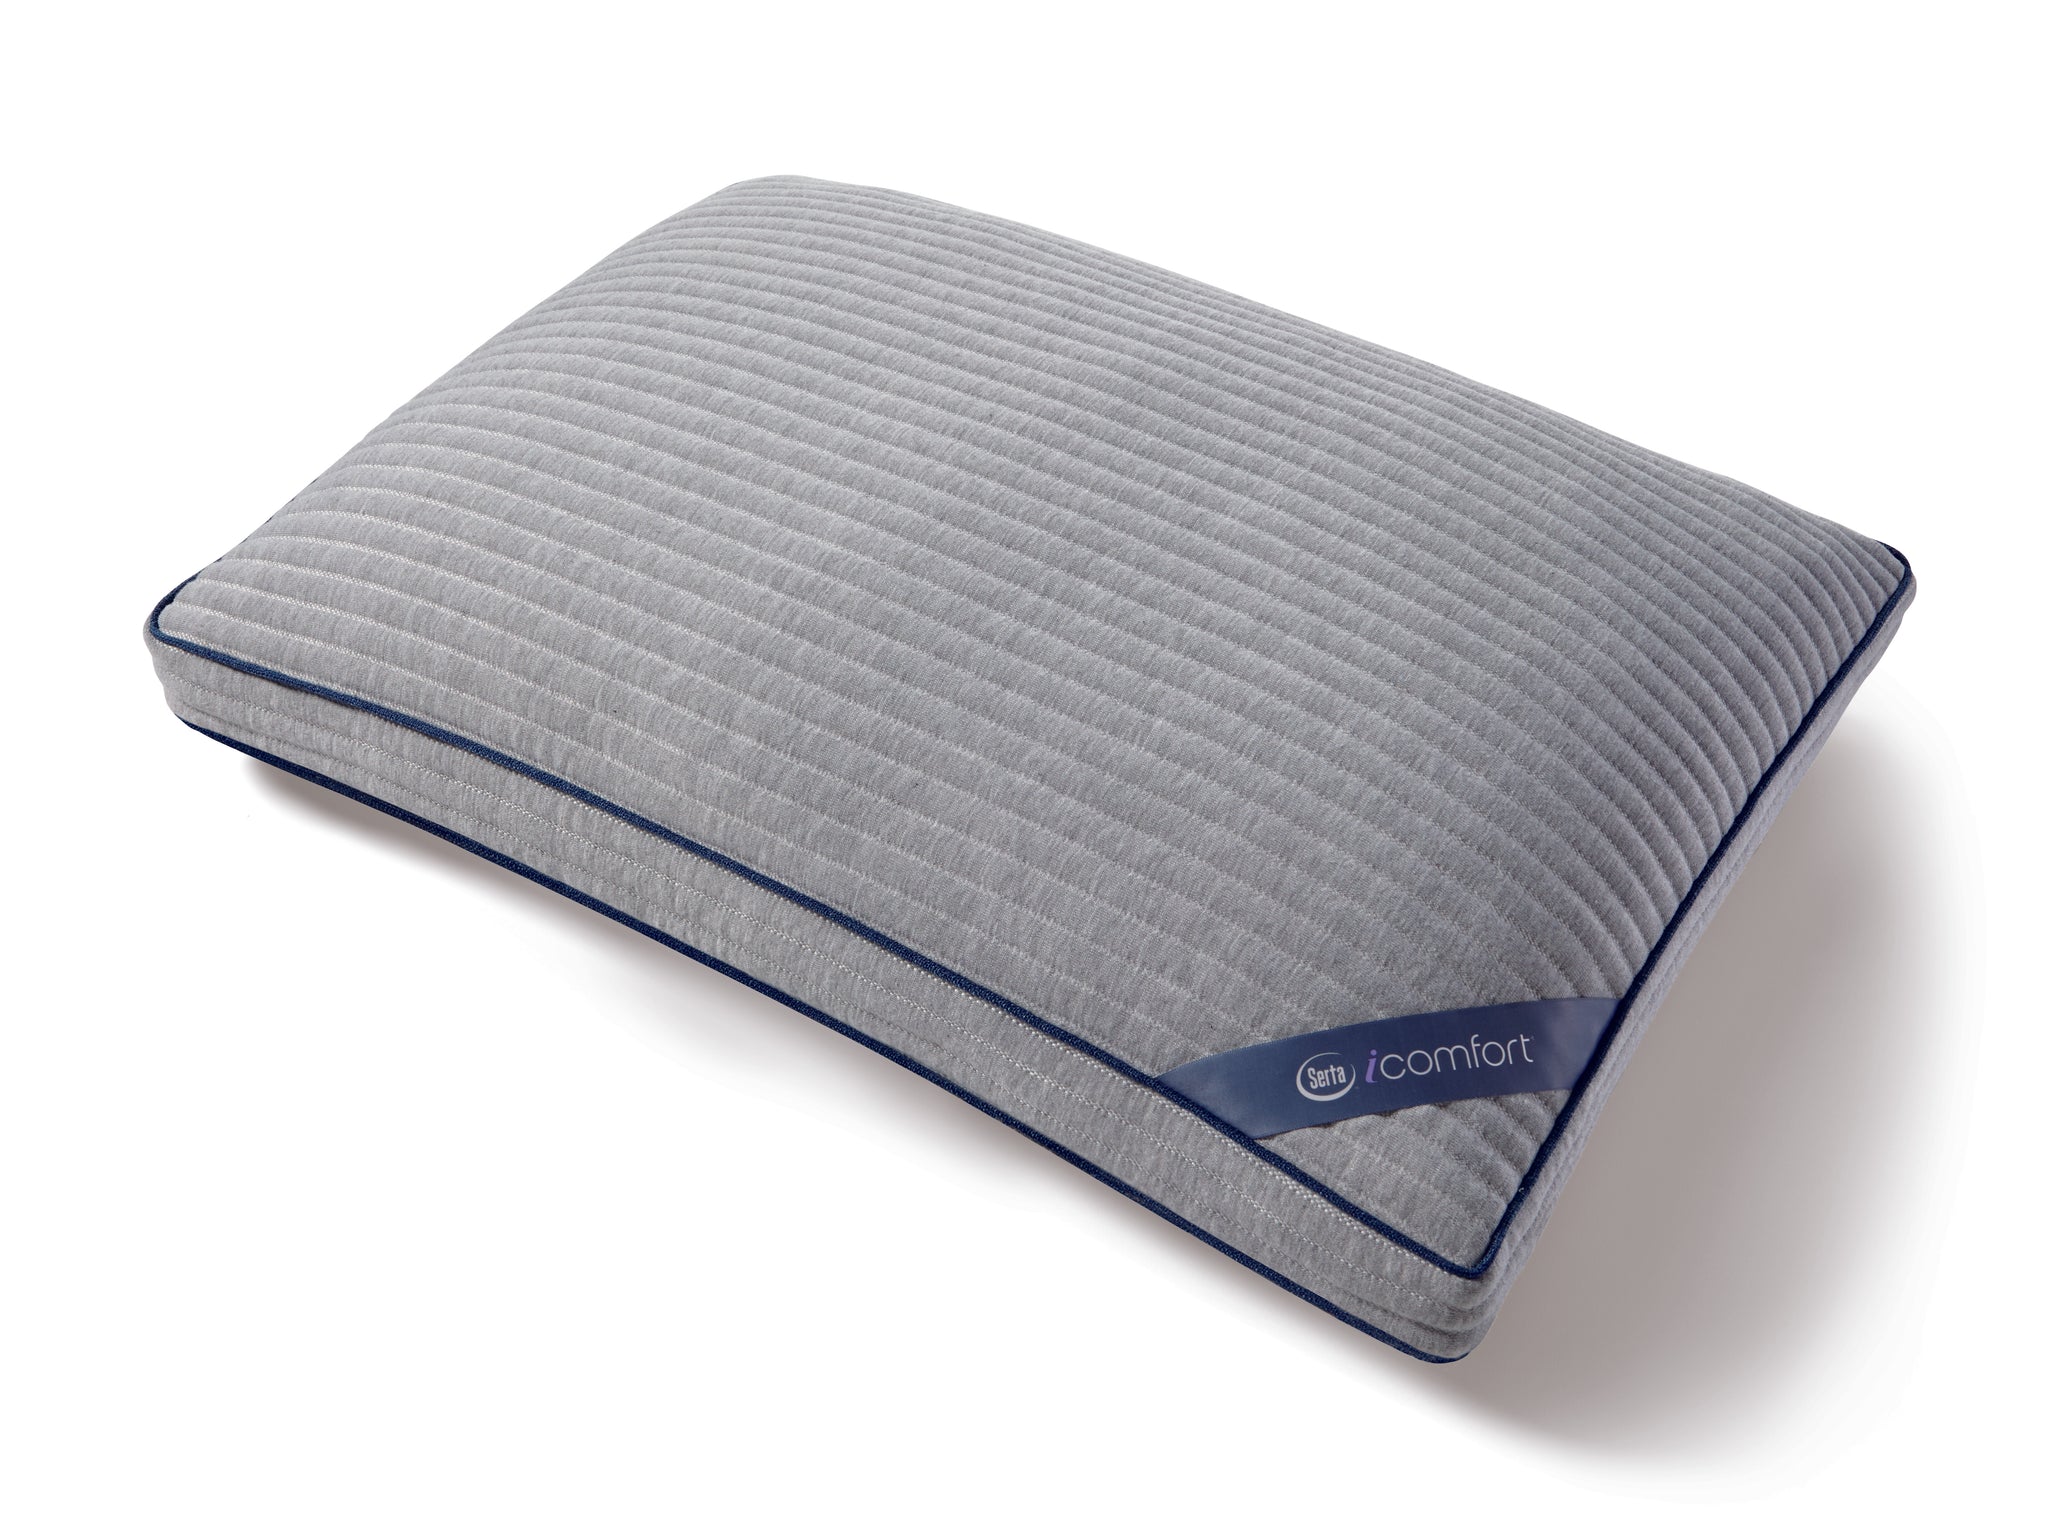 serta icomfort pillow top mattress